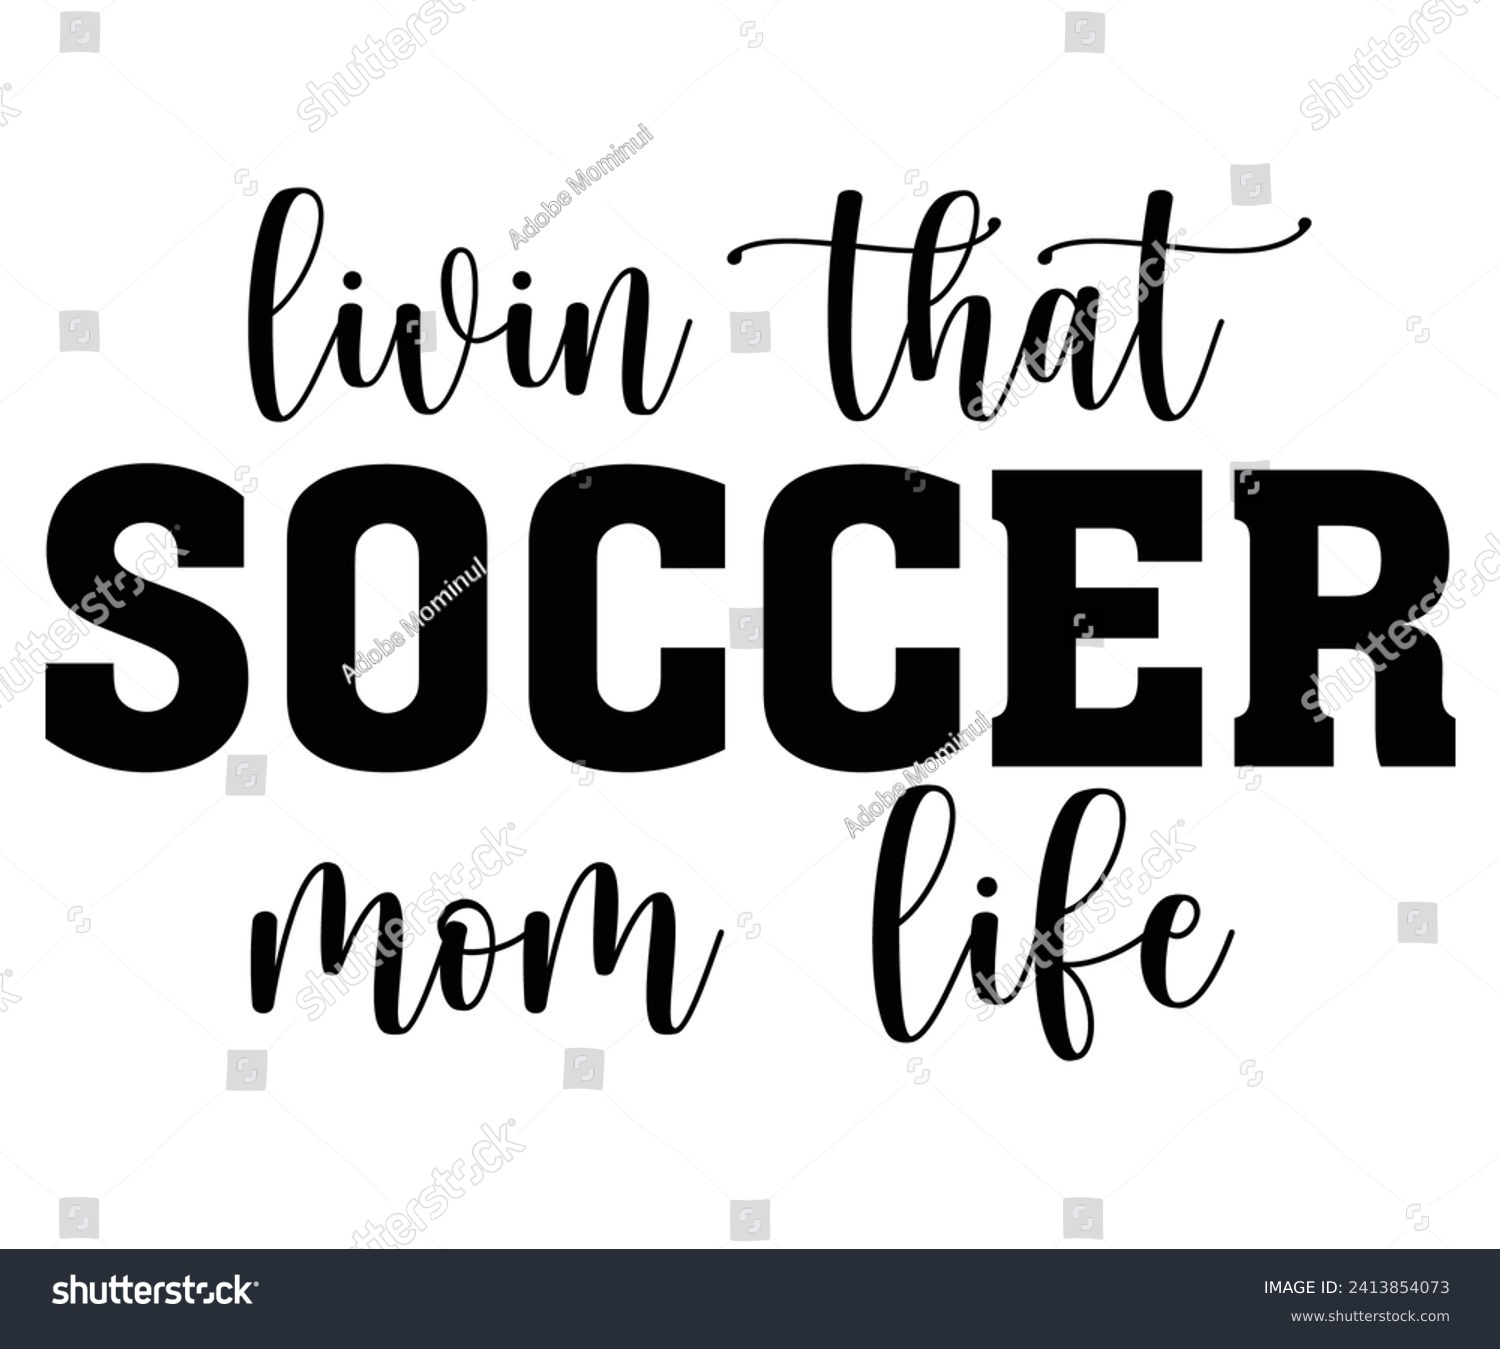 SVG of livin That Soccer Mom Life Svg,Soccer Svg,Soccer Quote Svg,Retro,Soccer Mom Shirt,Funny Shirt,Soccar Player Shirt,Game Day Shirt,Gift For Soccer,Dad of Soccer,Soccer Mascot,Soccer Football, svg